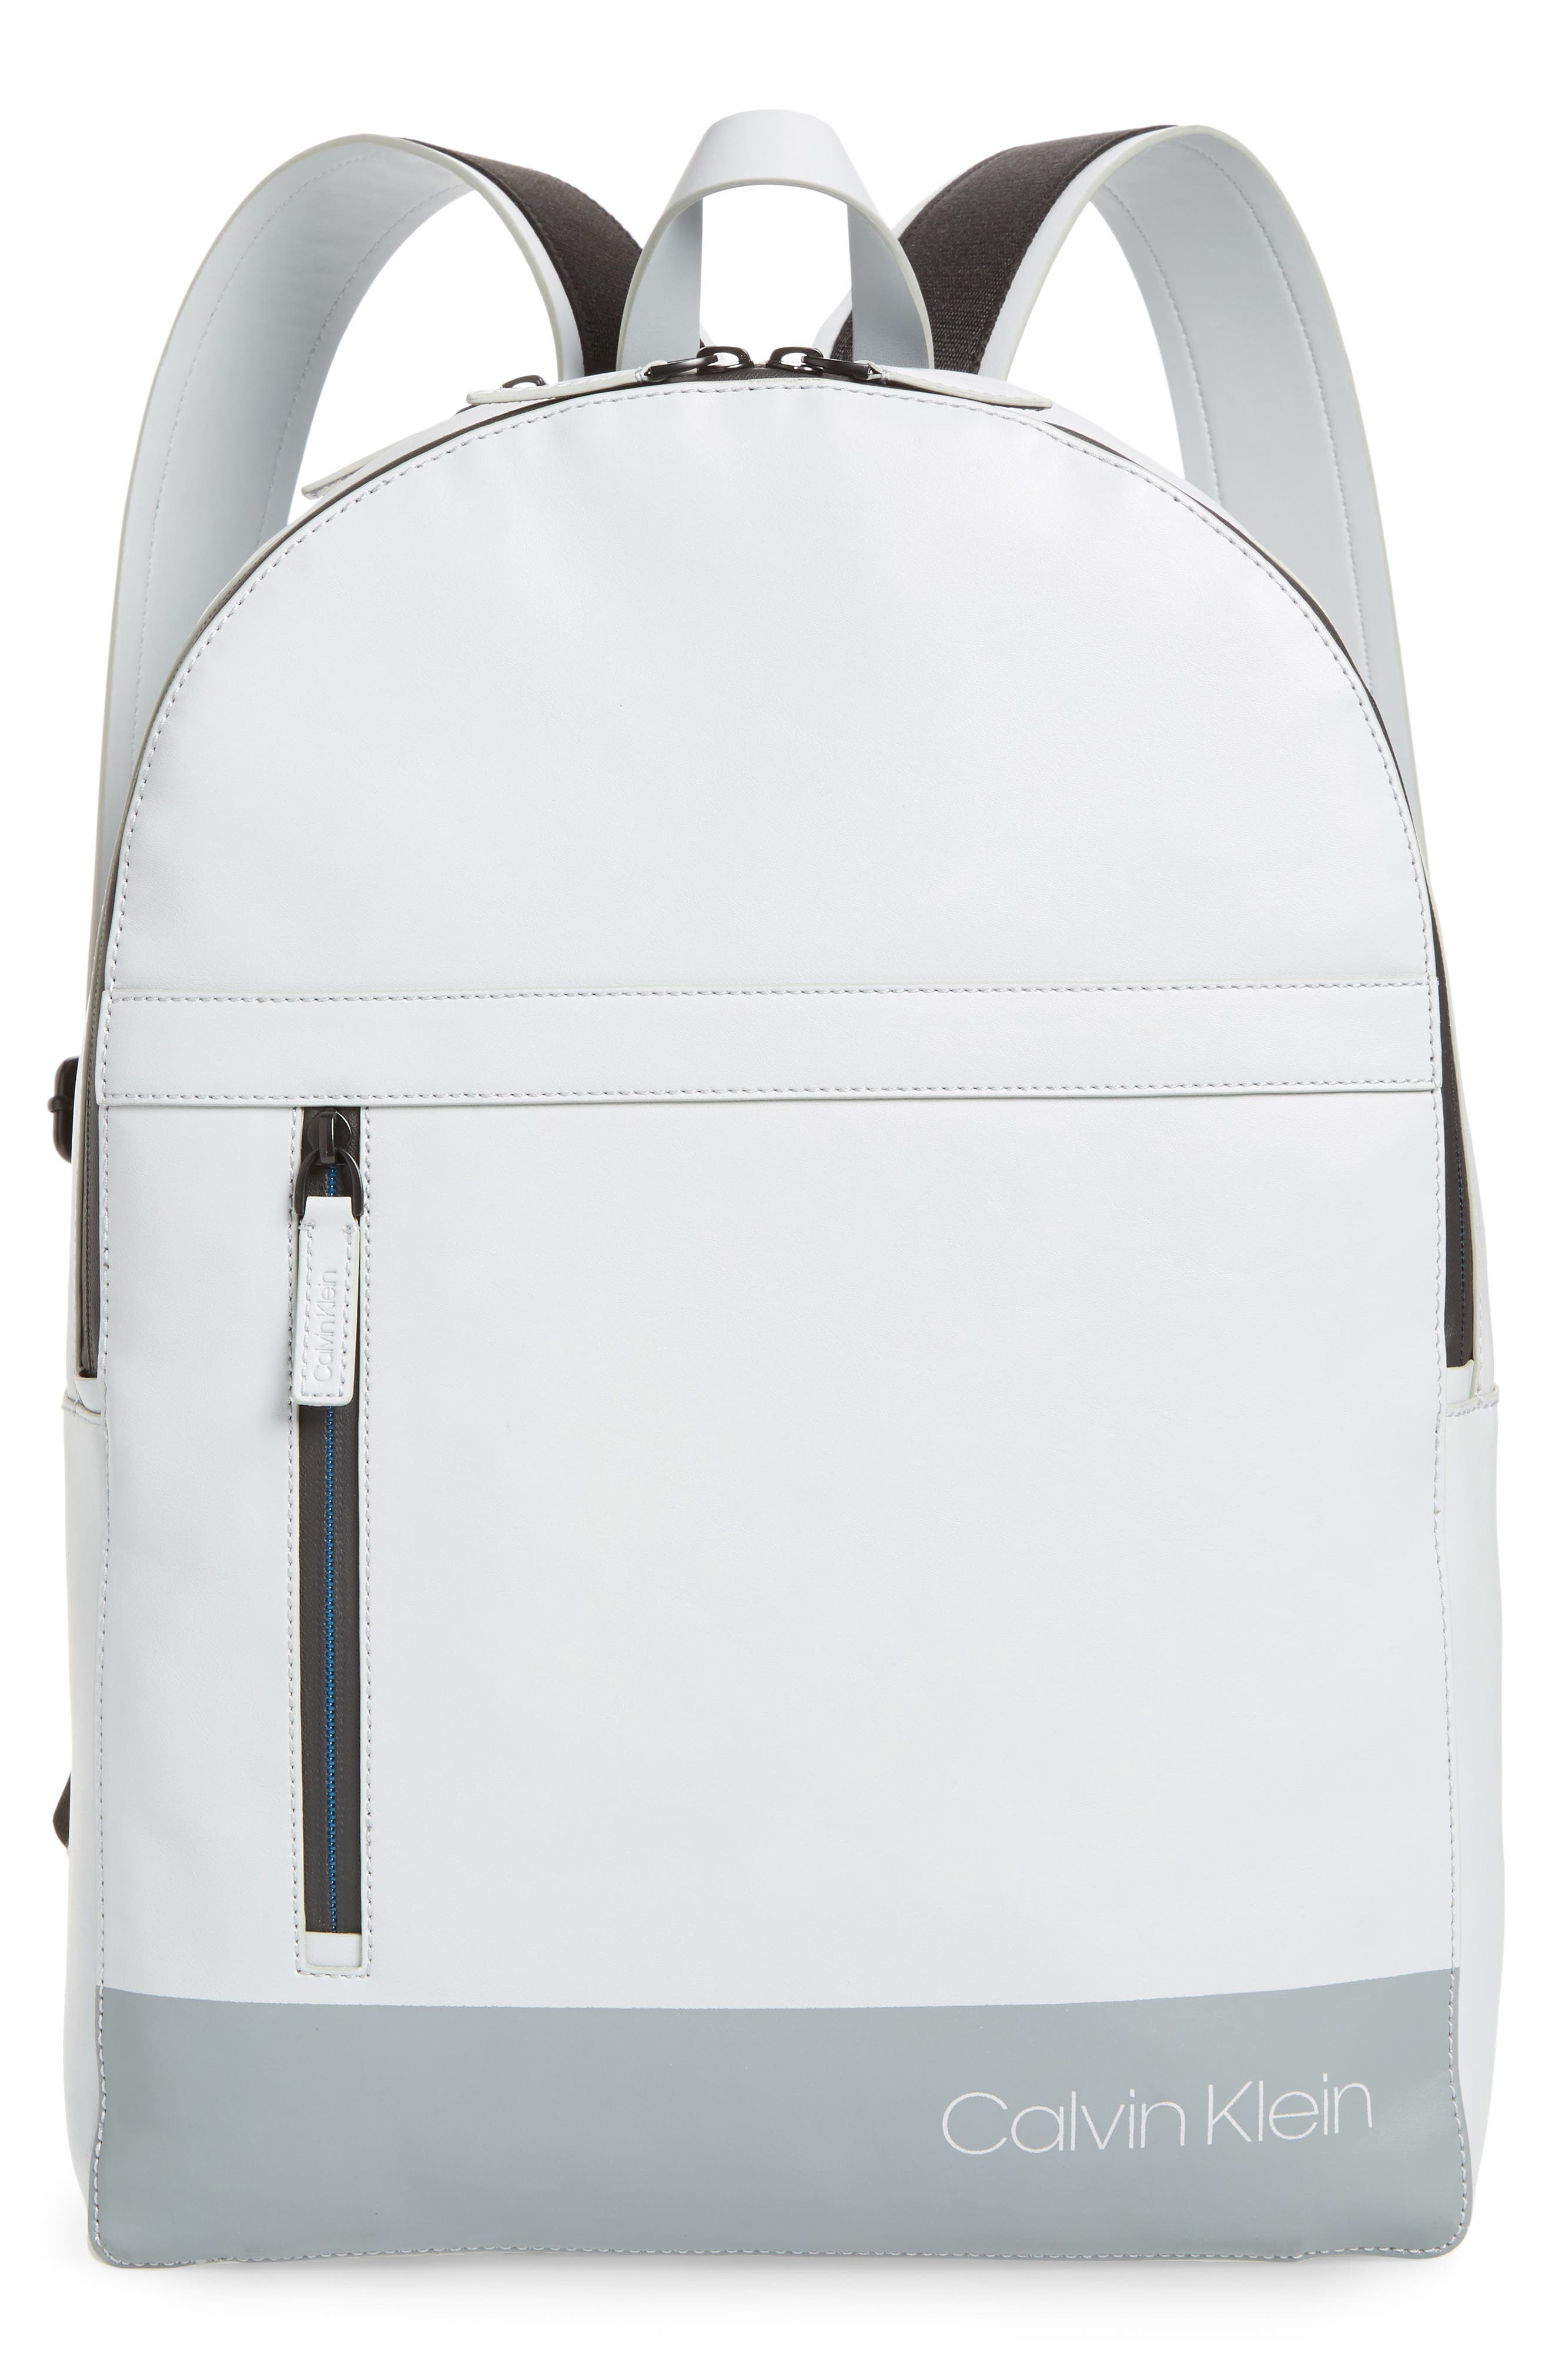 calvin klein backpack grey